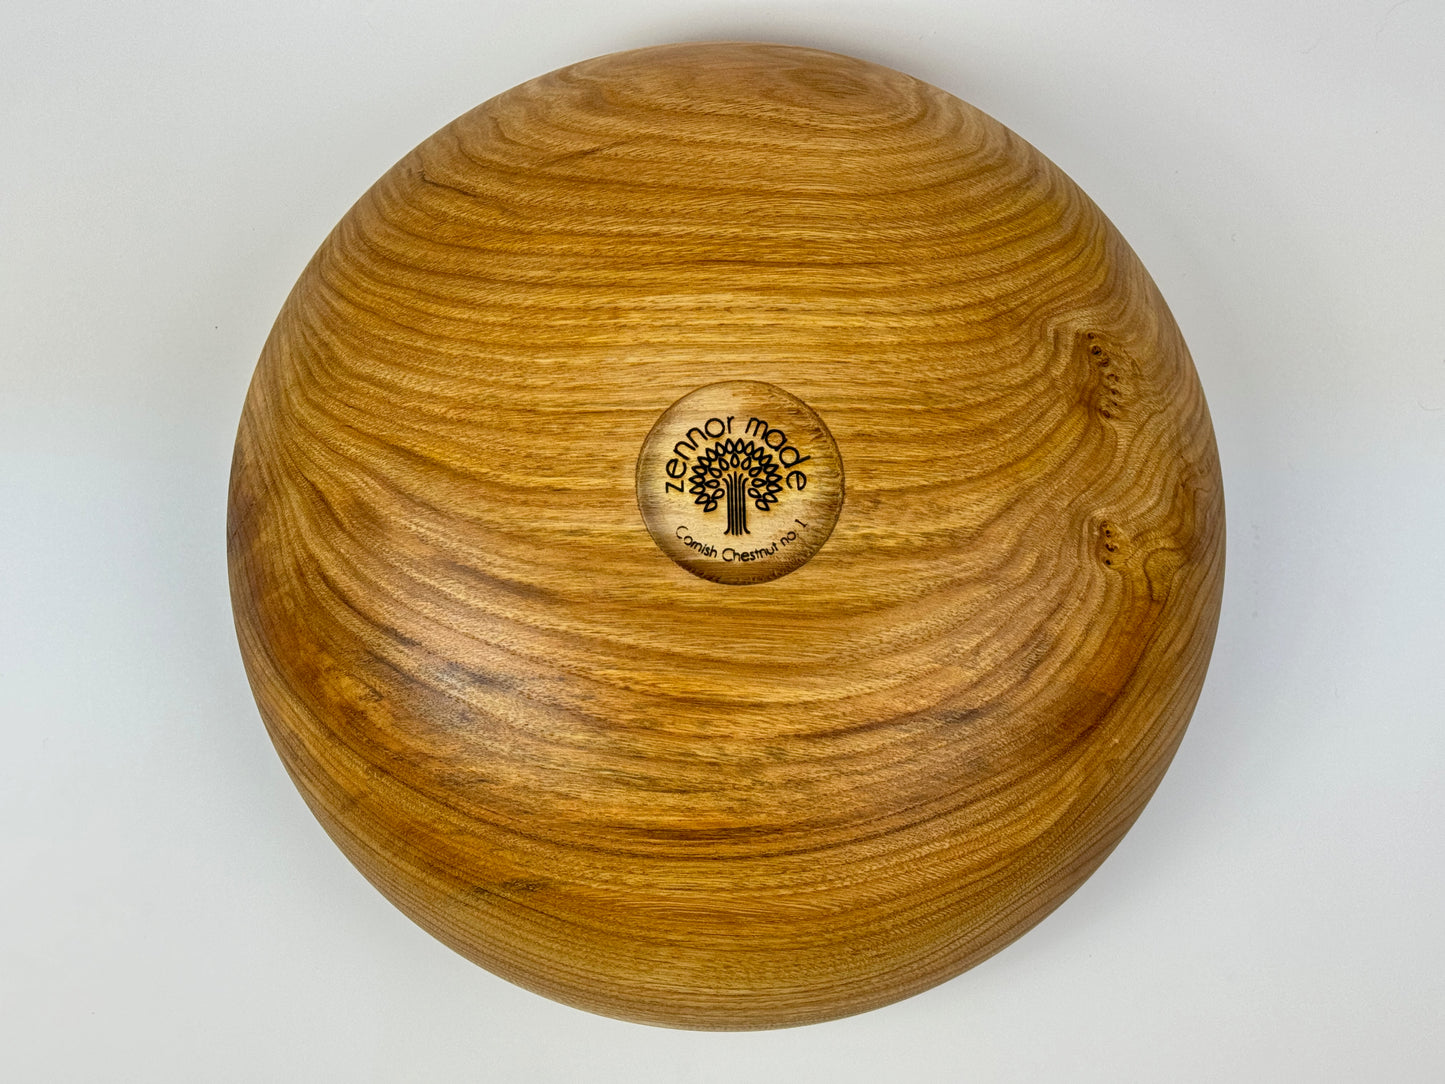 Cornish Chestnut Bowl 36cm